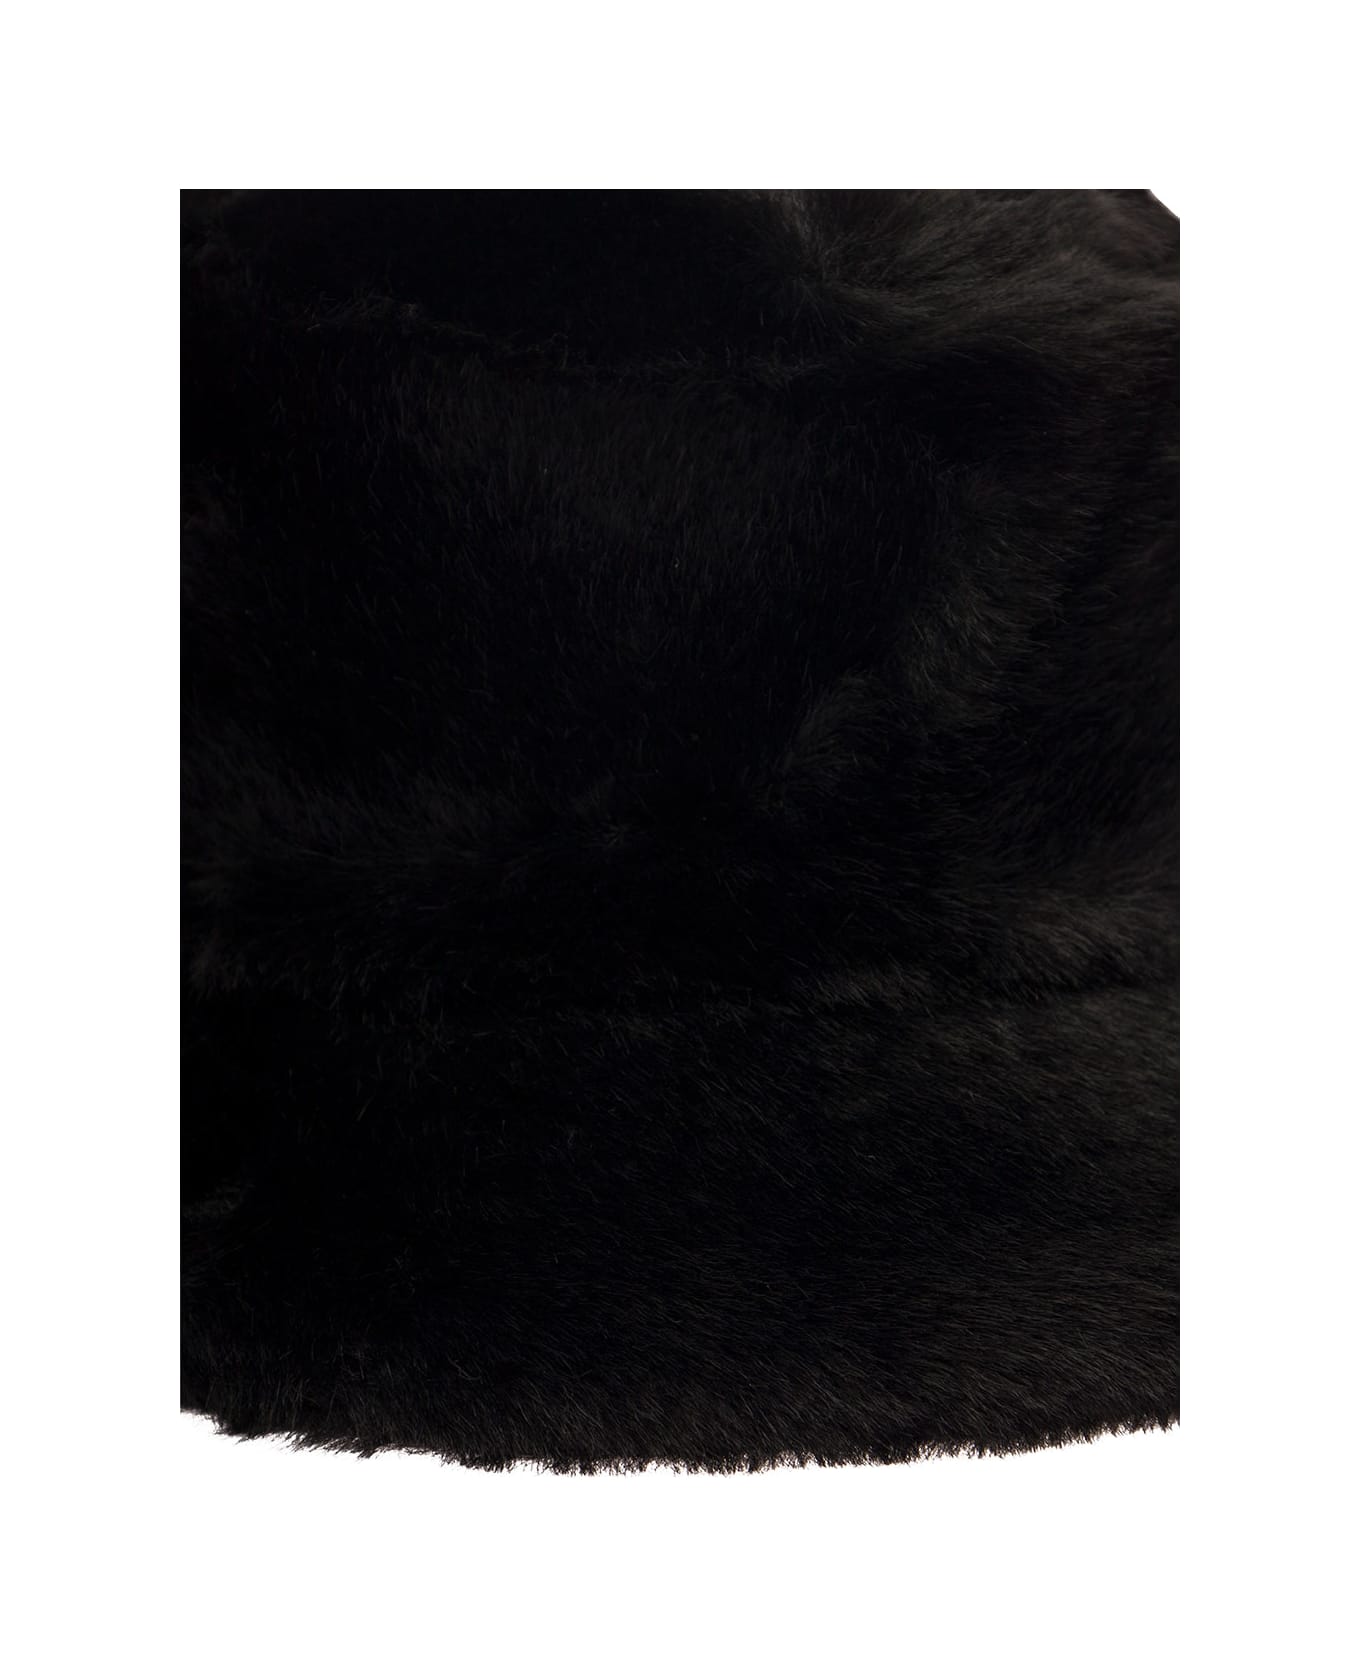 STAND STUDIO 'vera' Black Hat With Low Brim In Faux Fur Woman - Nero